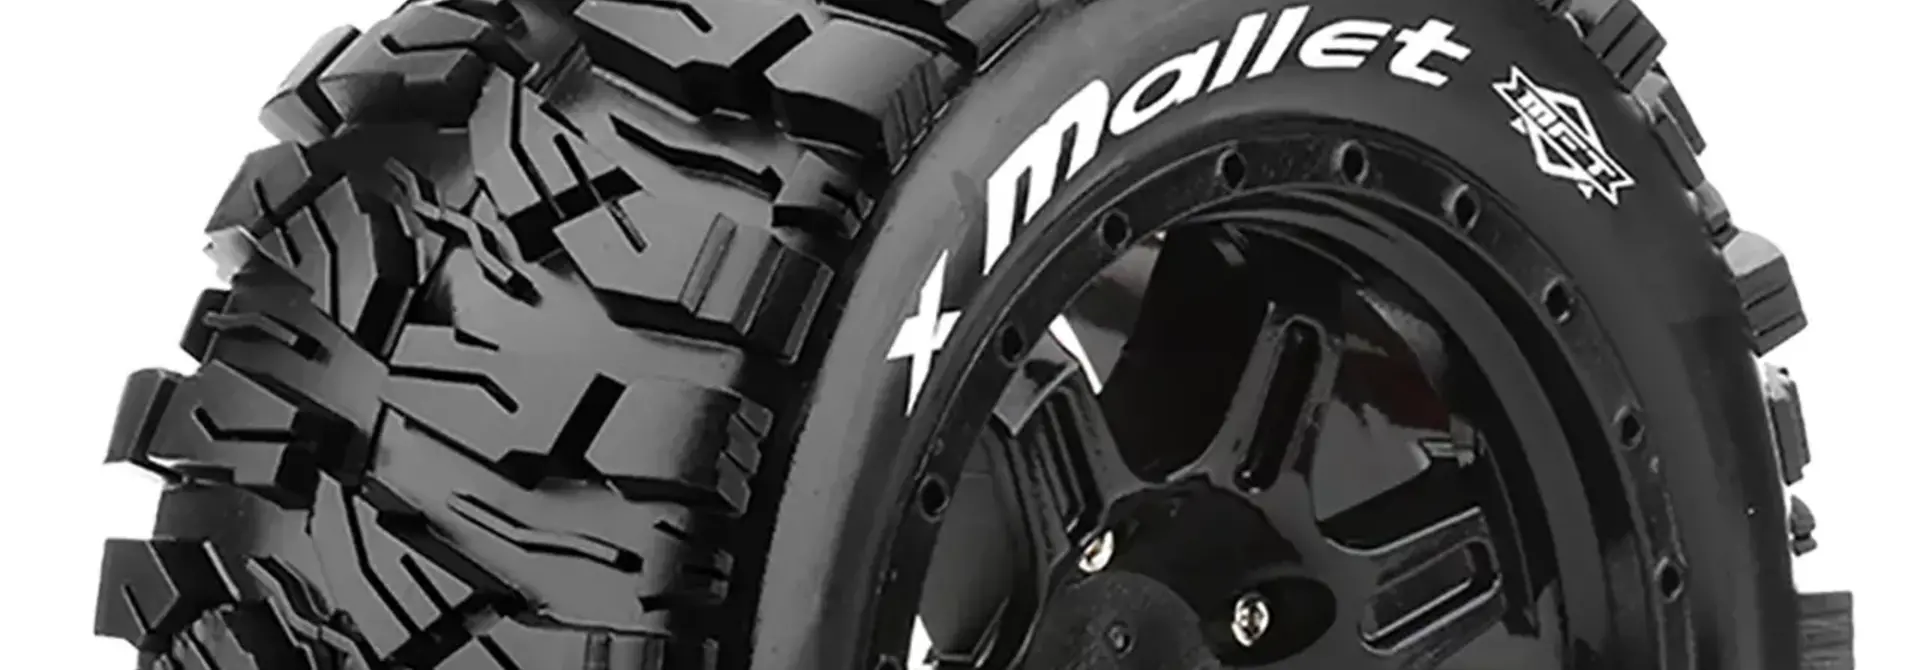 Louise RC - MFT - X-MALLET - Tire Set for X-Maxx - Mounted - Sport - Black wheels - Hex 24mm - LR-T3350B